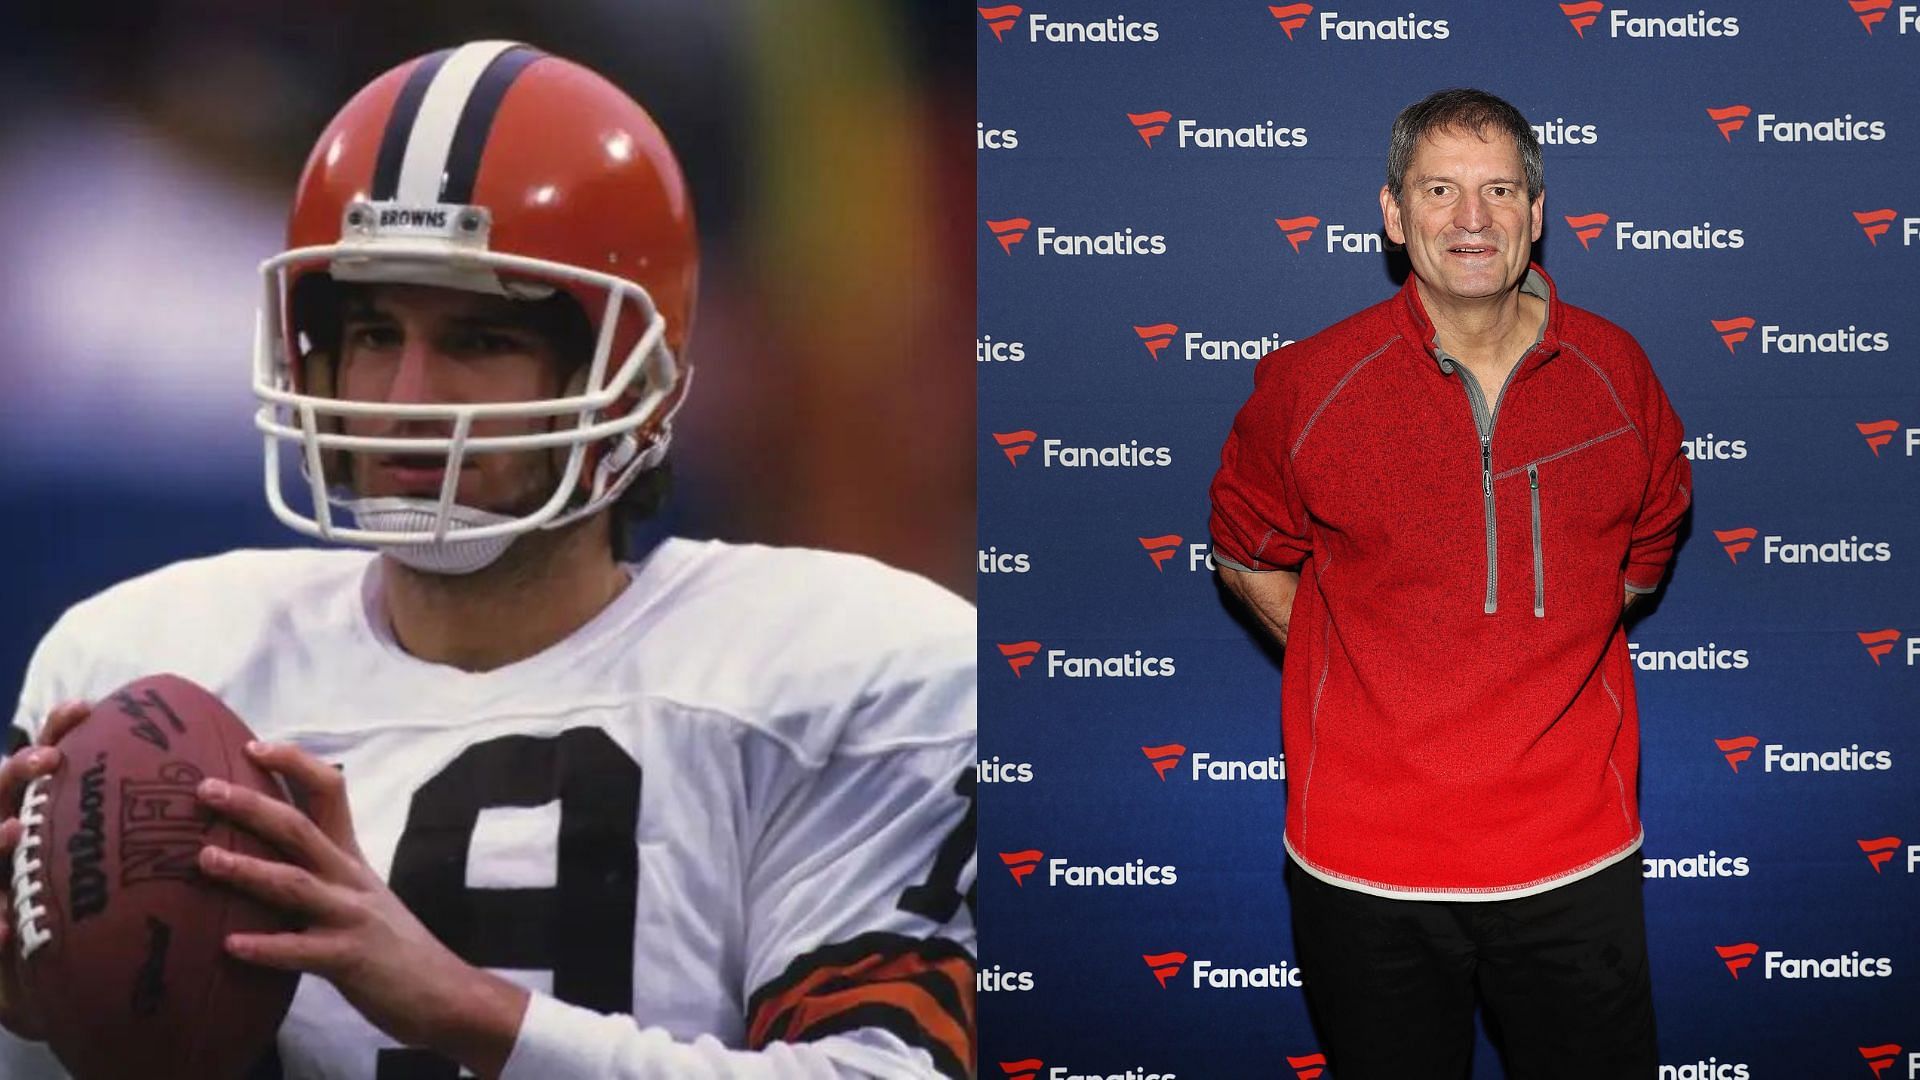 The story of Super Bowl winning quarterback Bernie Kosar